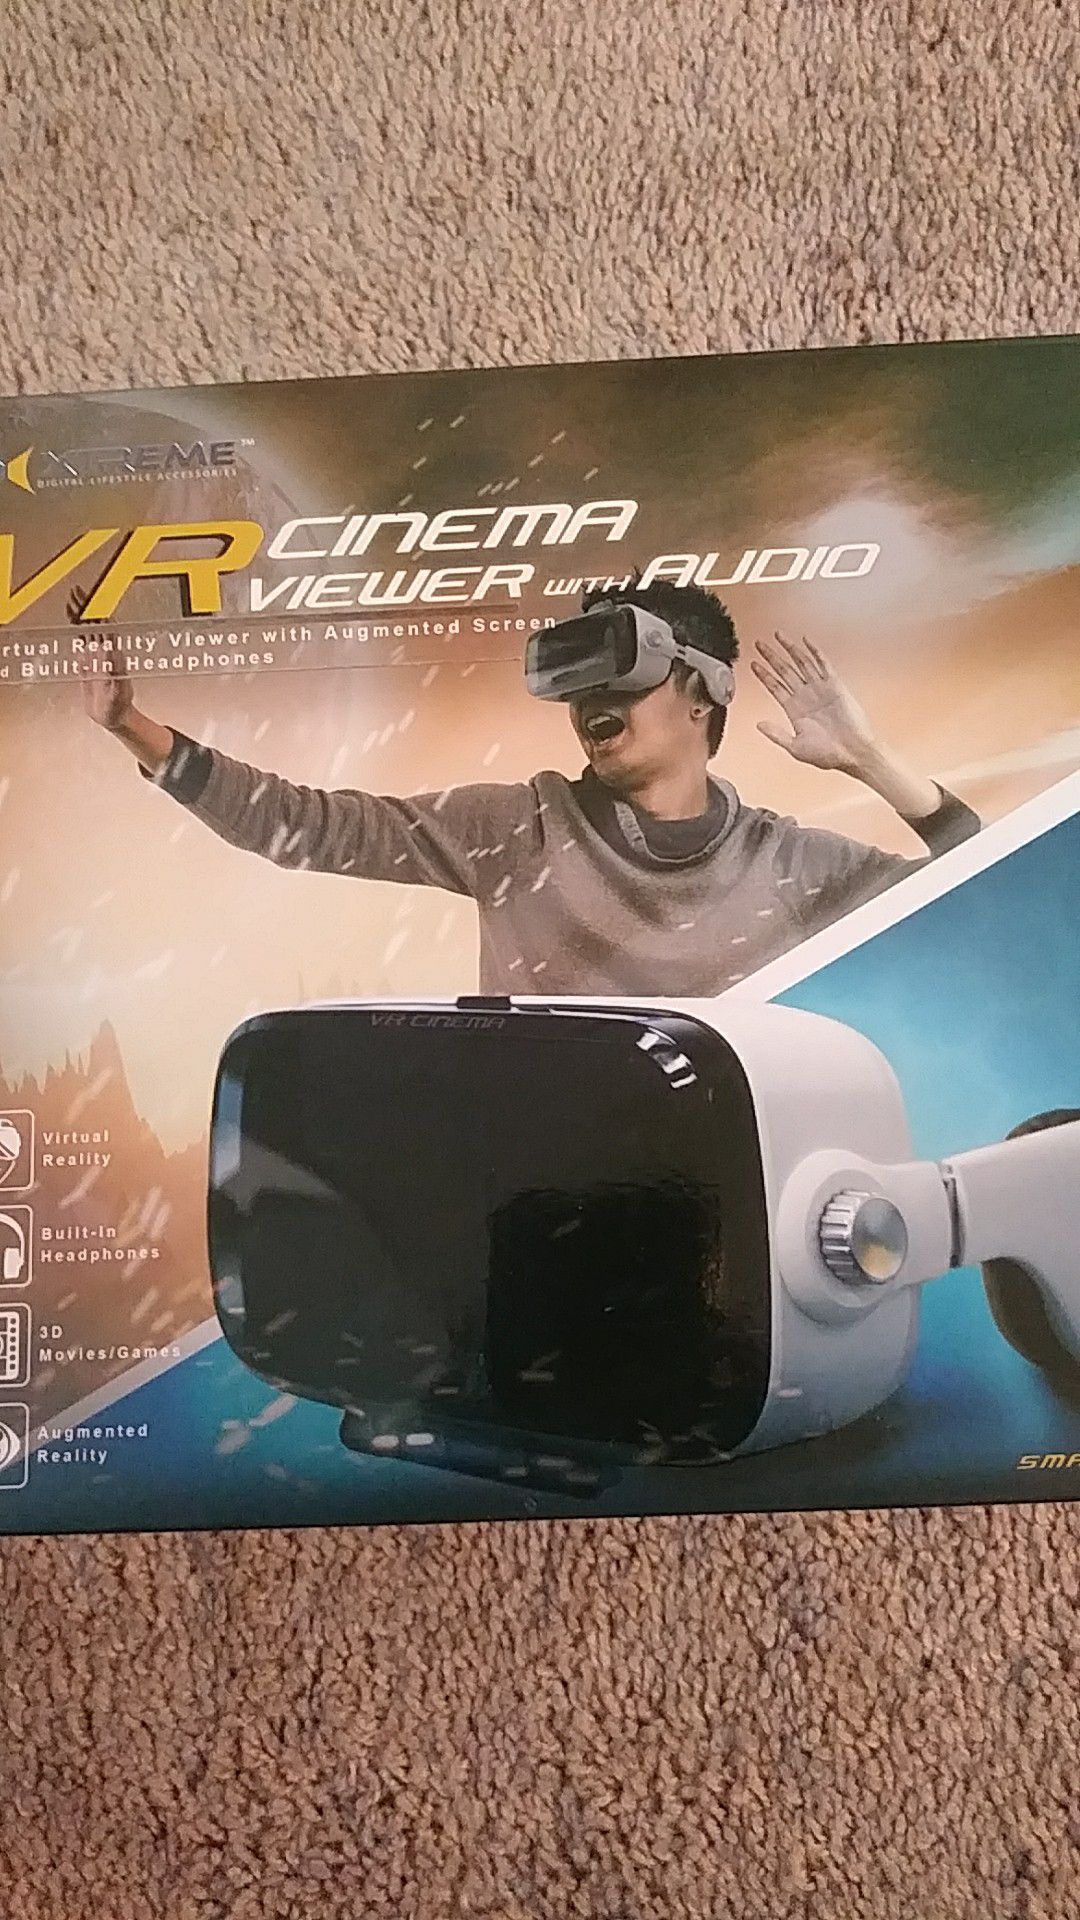 VR Cinema Viewer with Audio